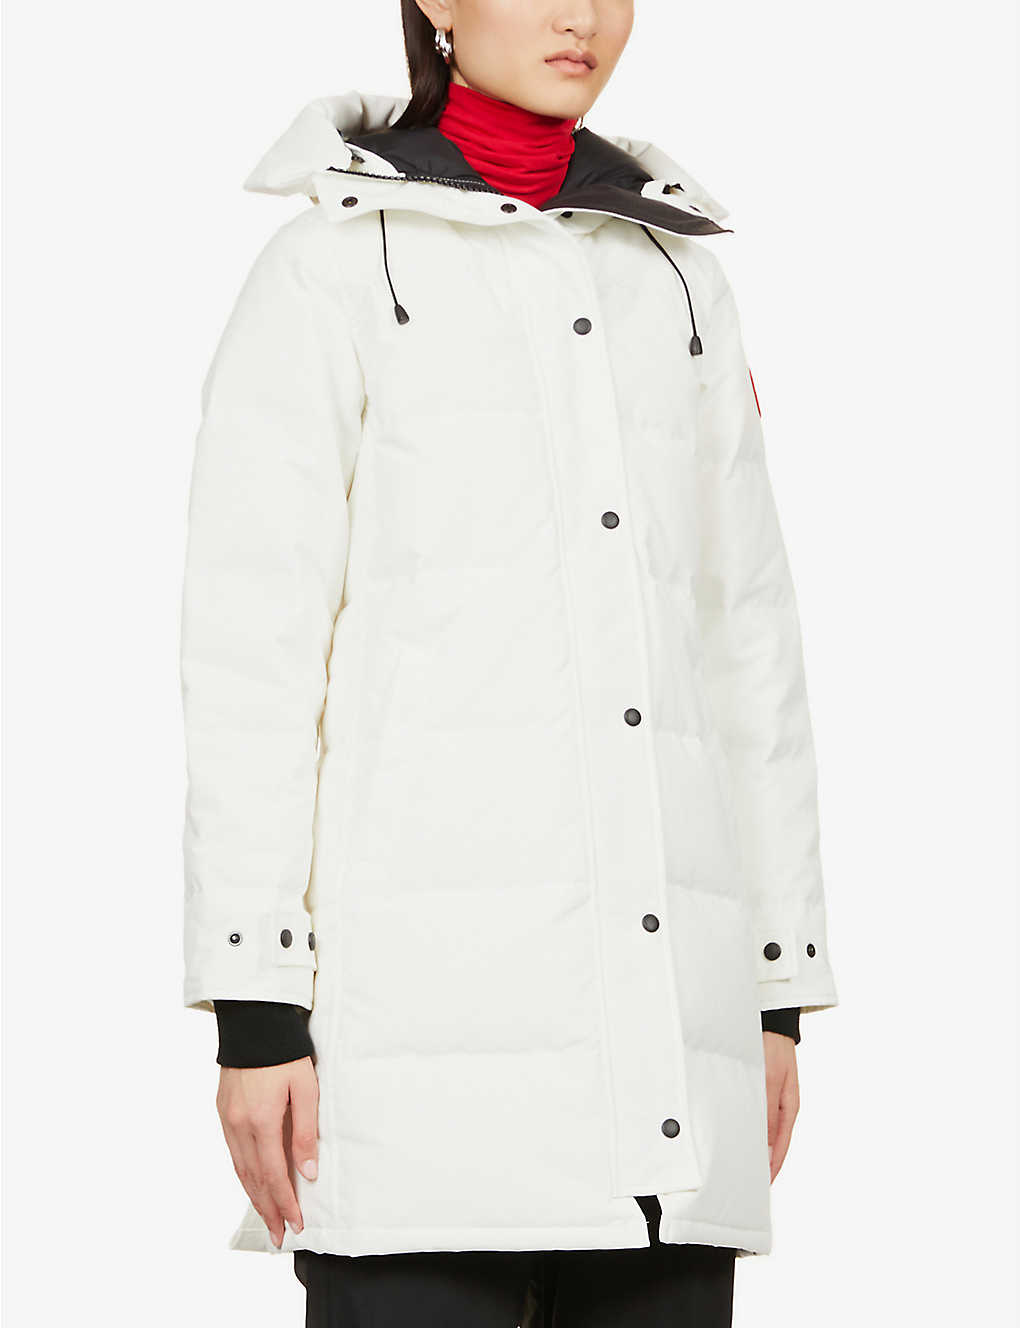 White Shelburne coat from Canada Goose